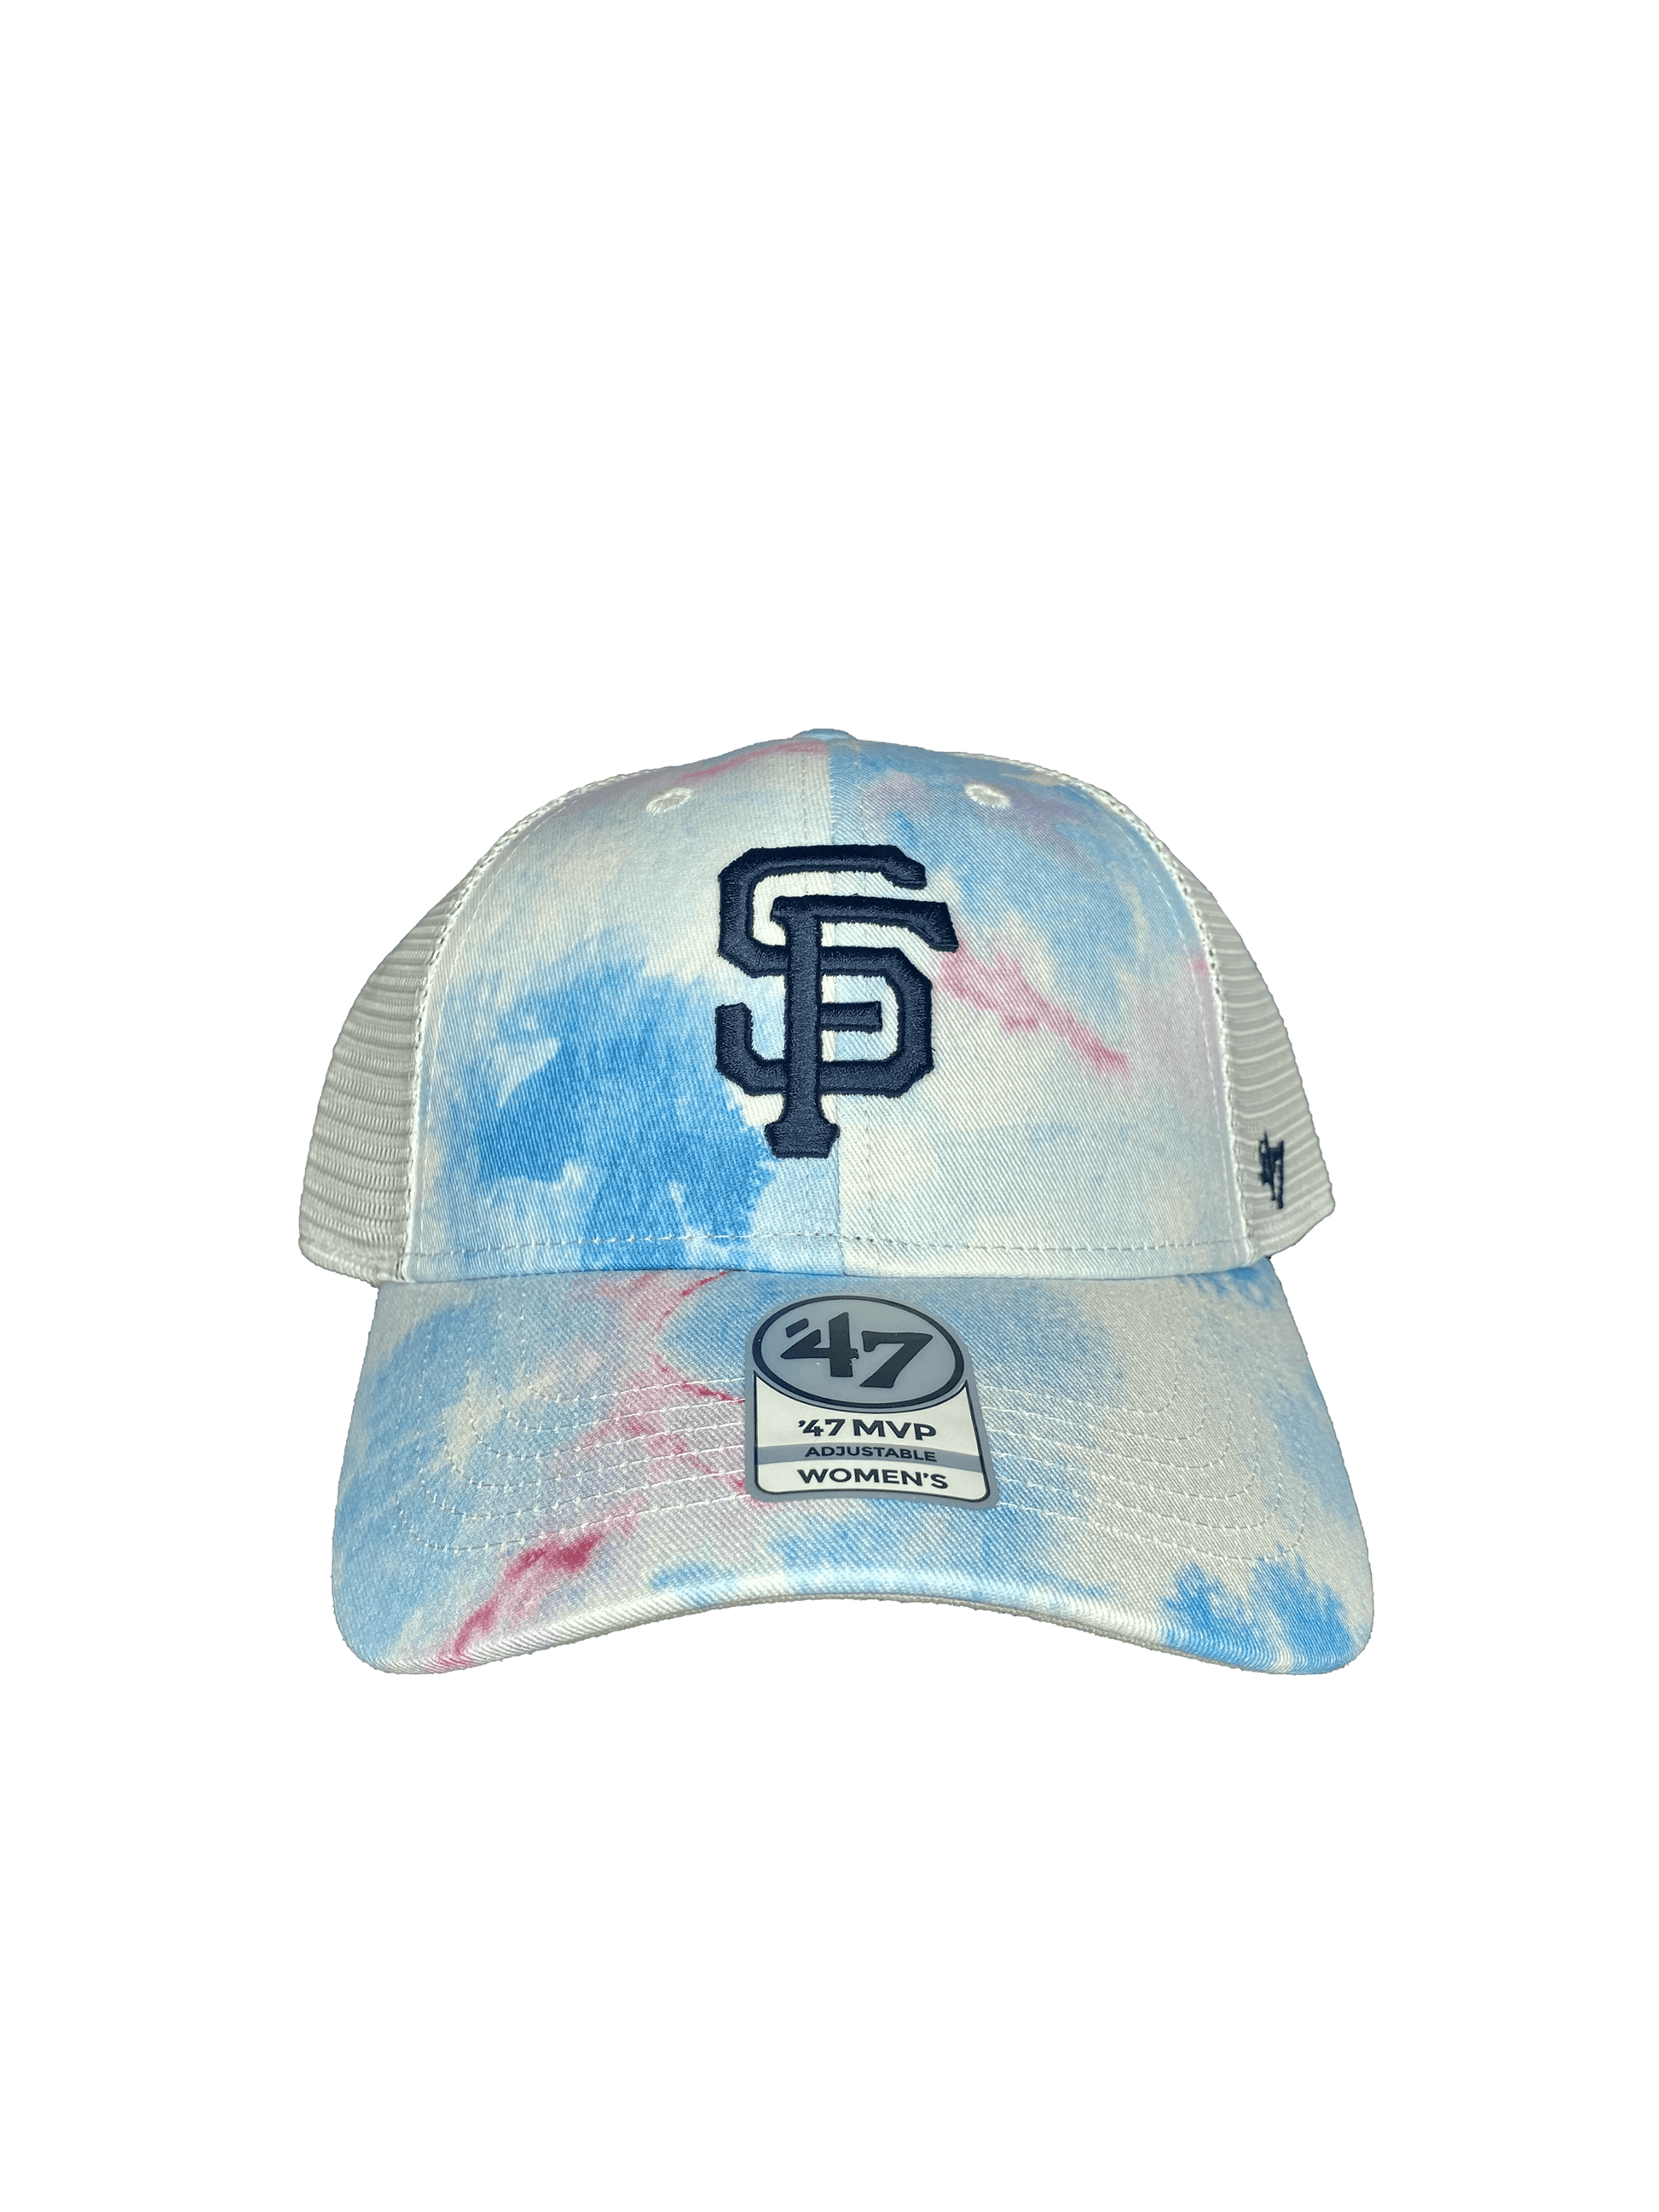 San Francisco Giants MLB '47 Brand Gray Two Tone Snapback